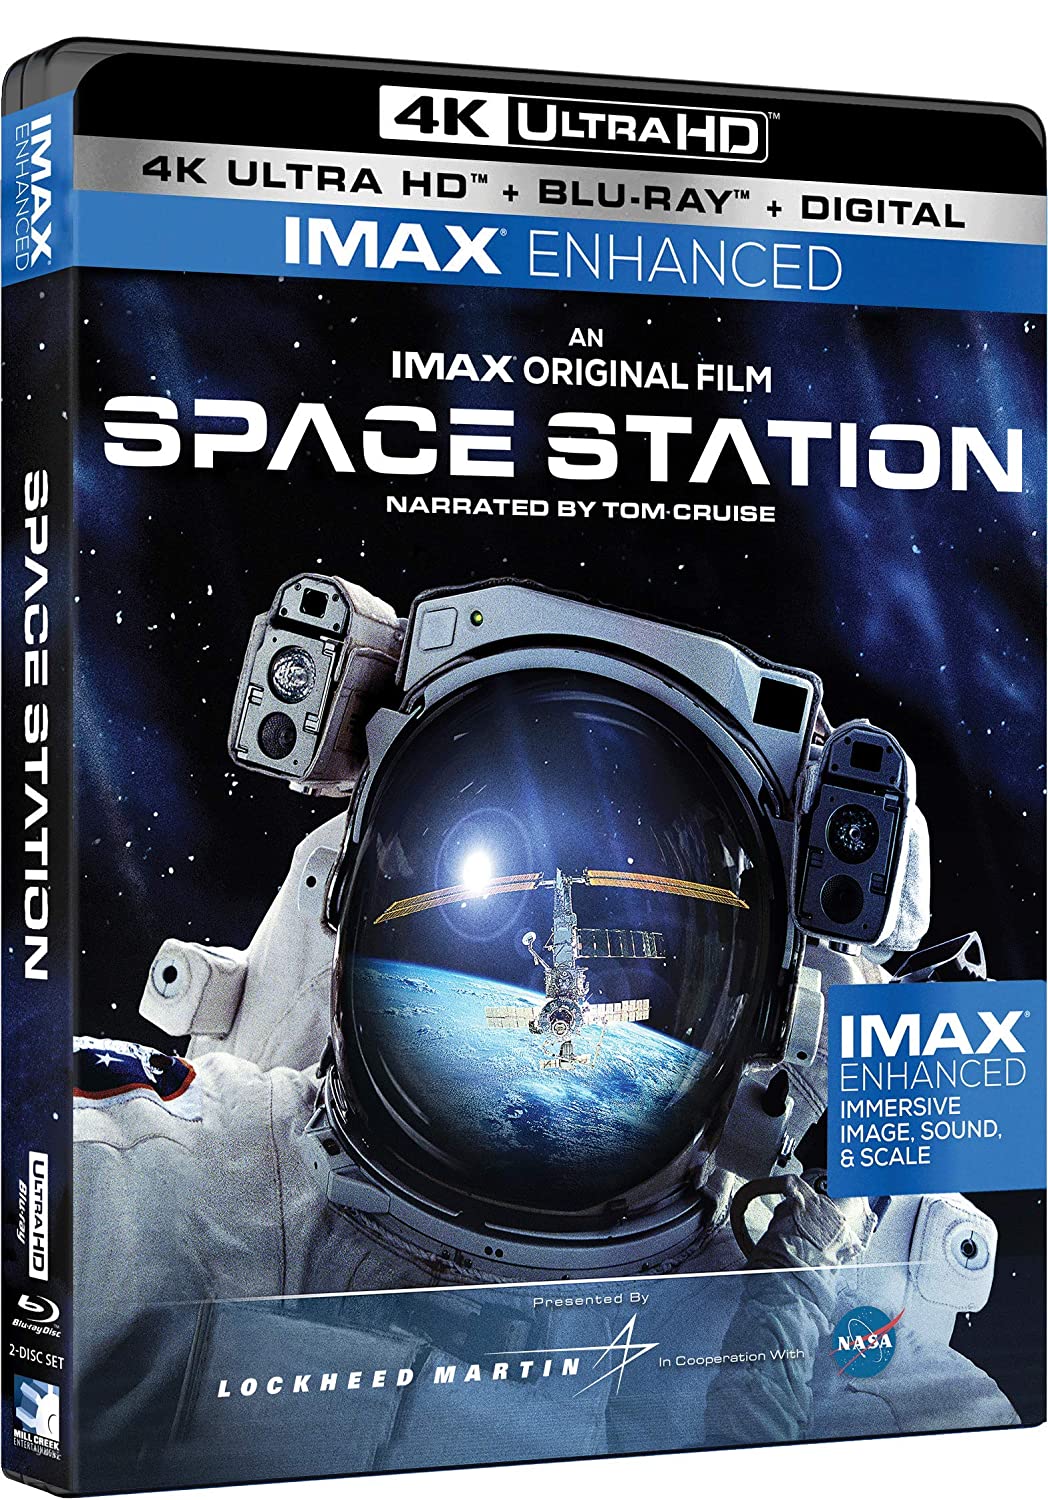 Space Station (IMAX Enhanced, 4K Ultra HD + Blu-ray + Digital) $9.99 @ Amazon